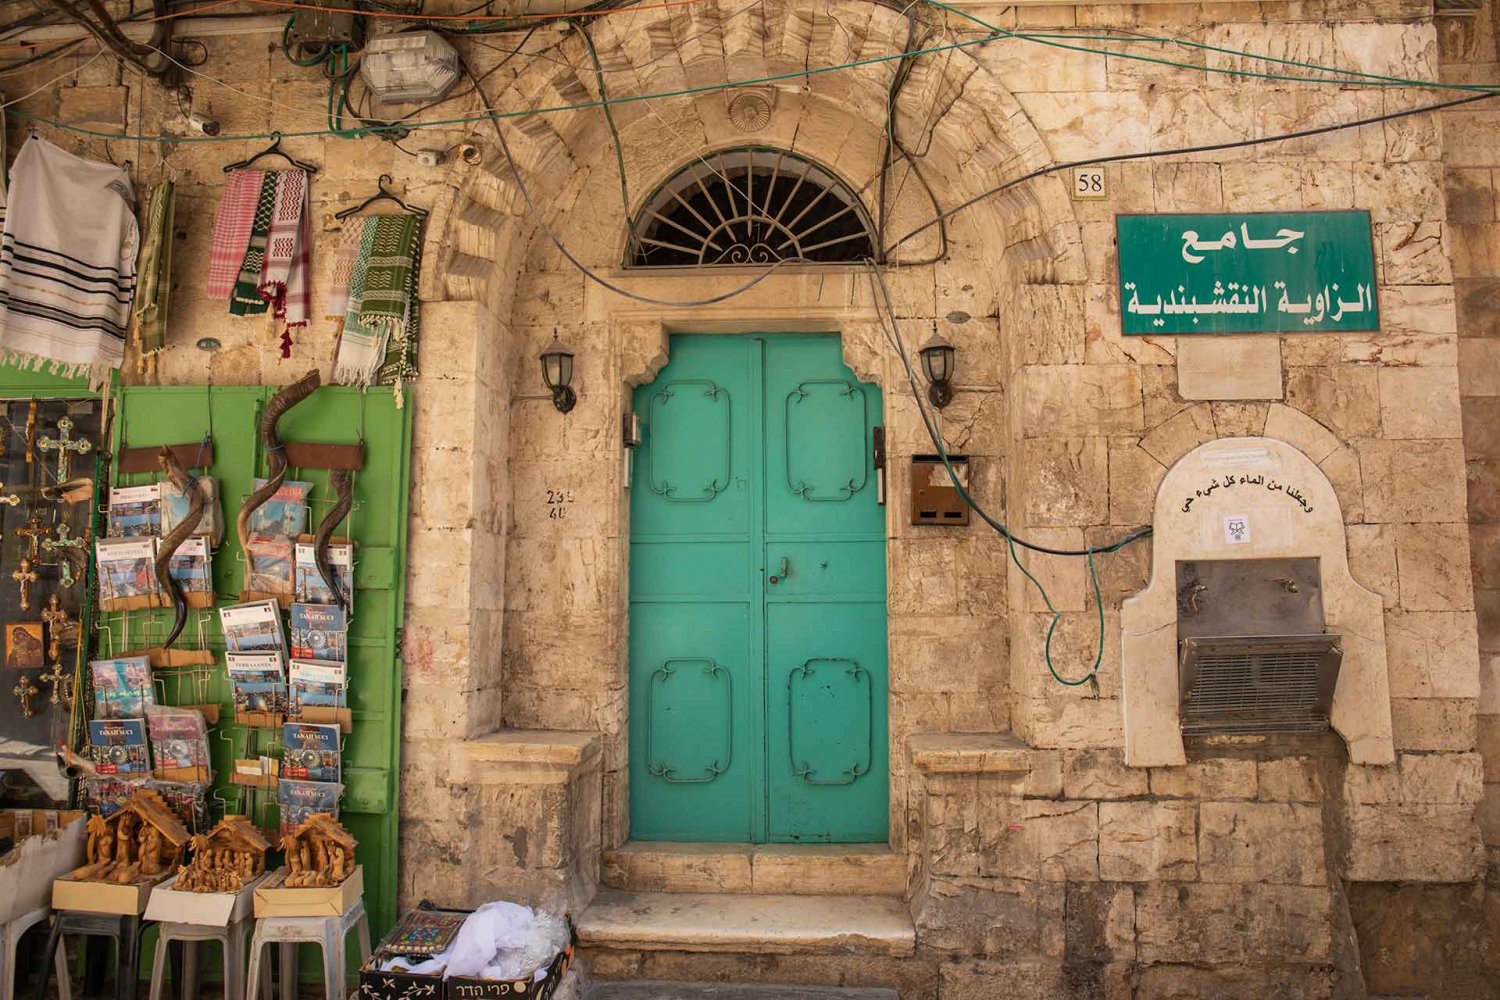 Outside the Naqshabandi Corner (al-Zawiya al-Naqshabandiyya Mosque) at the Via Dolorosa in the Old City of Jerusalem